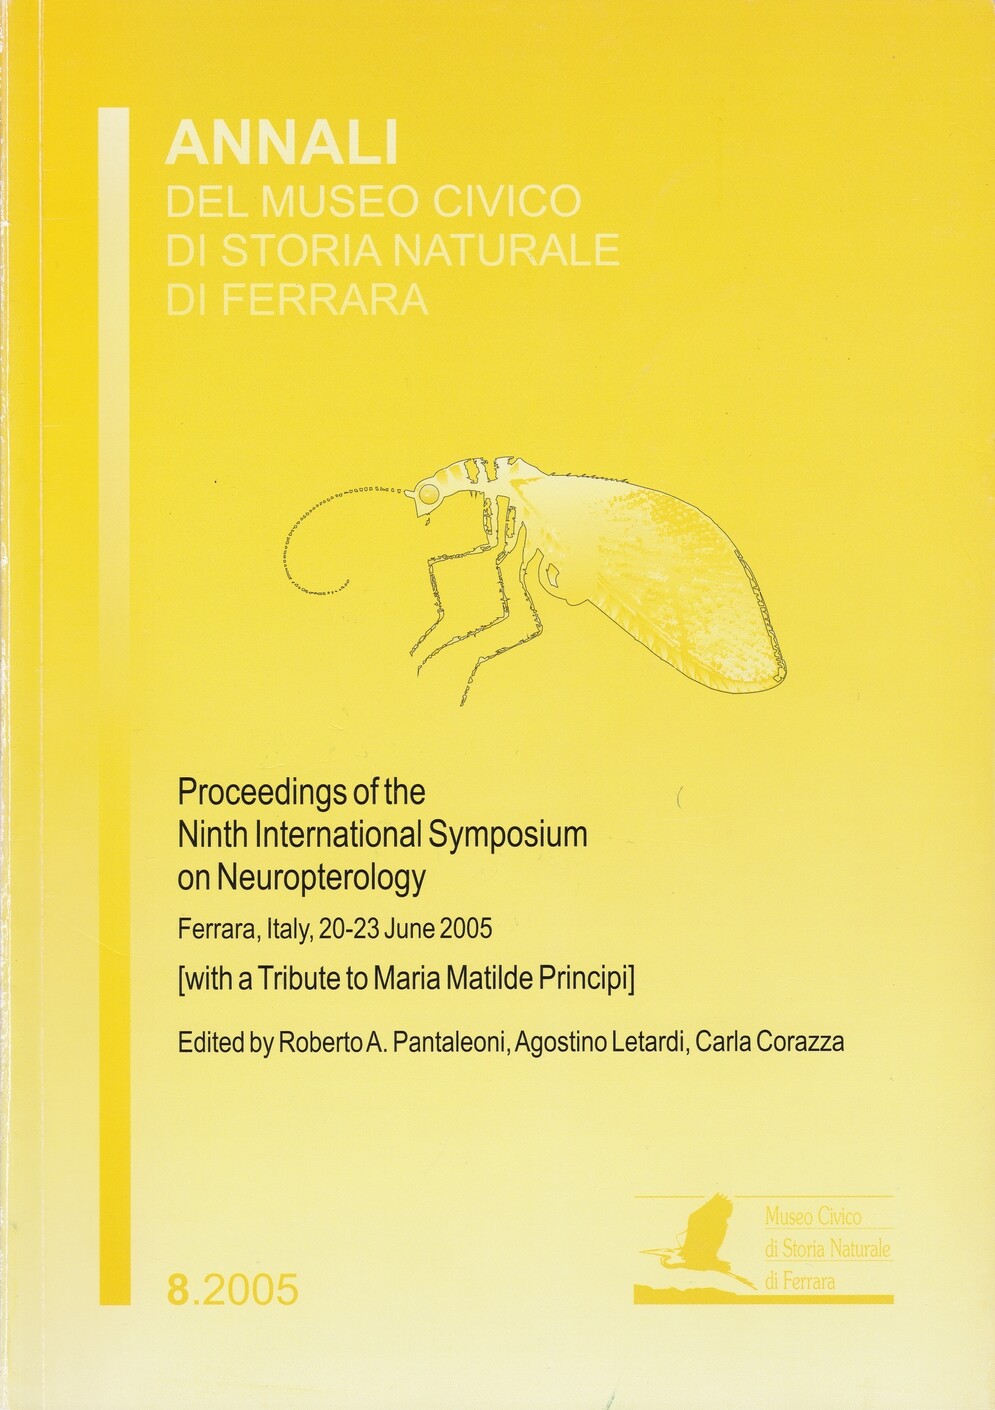 Annali del Museo Civico di Storia Naturale di Ferrara 2005/8. - Proceedings of the Ninth International Symposium on Neuropterology (Rippl-Rónai Múzeum CC BY-NC-ND)